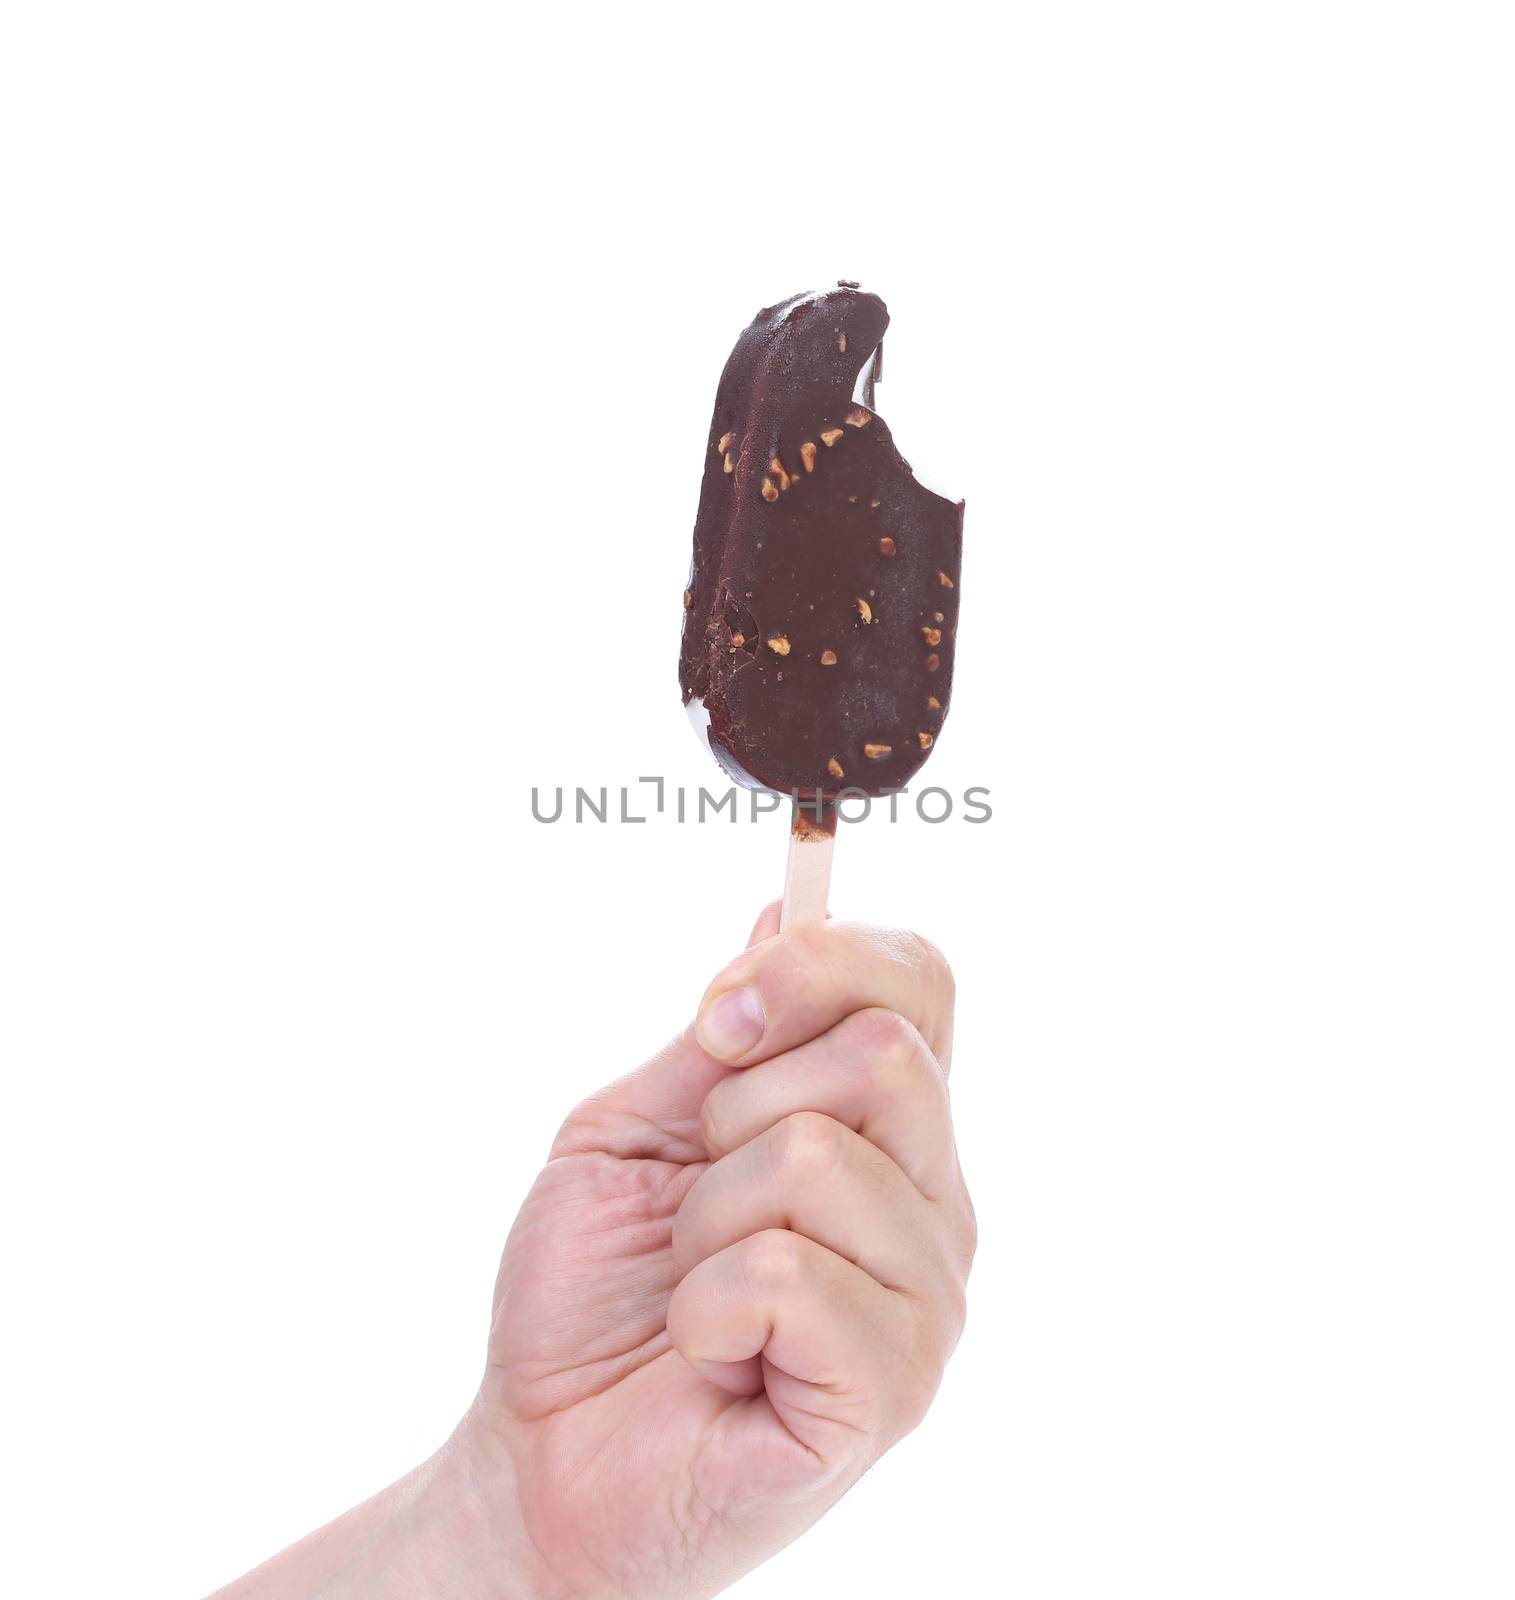 Hand holding chocolate ice cream. by indigolotos